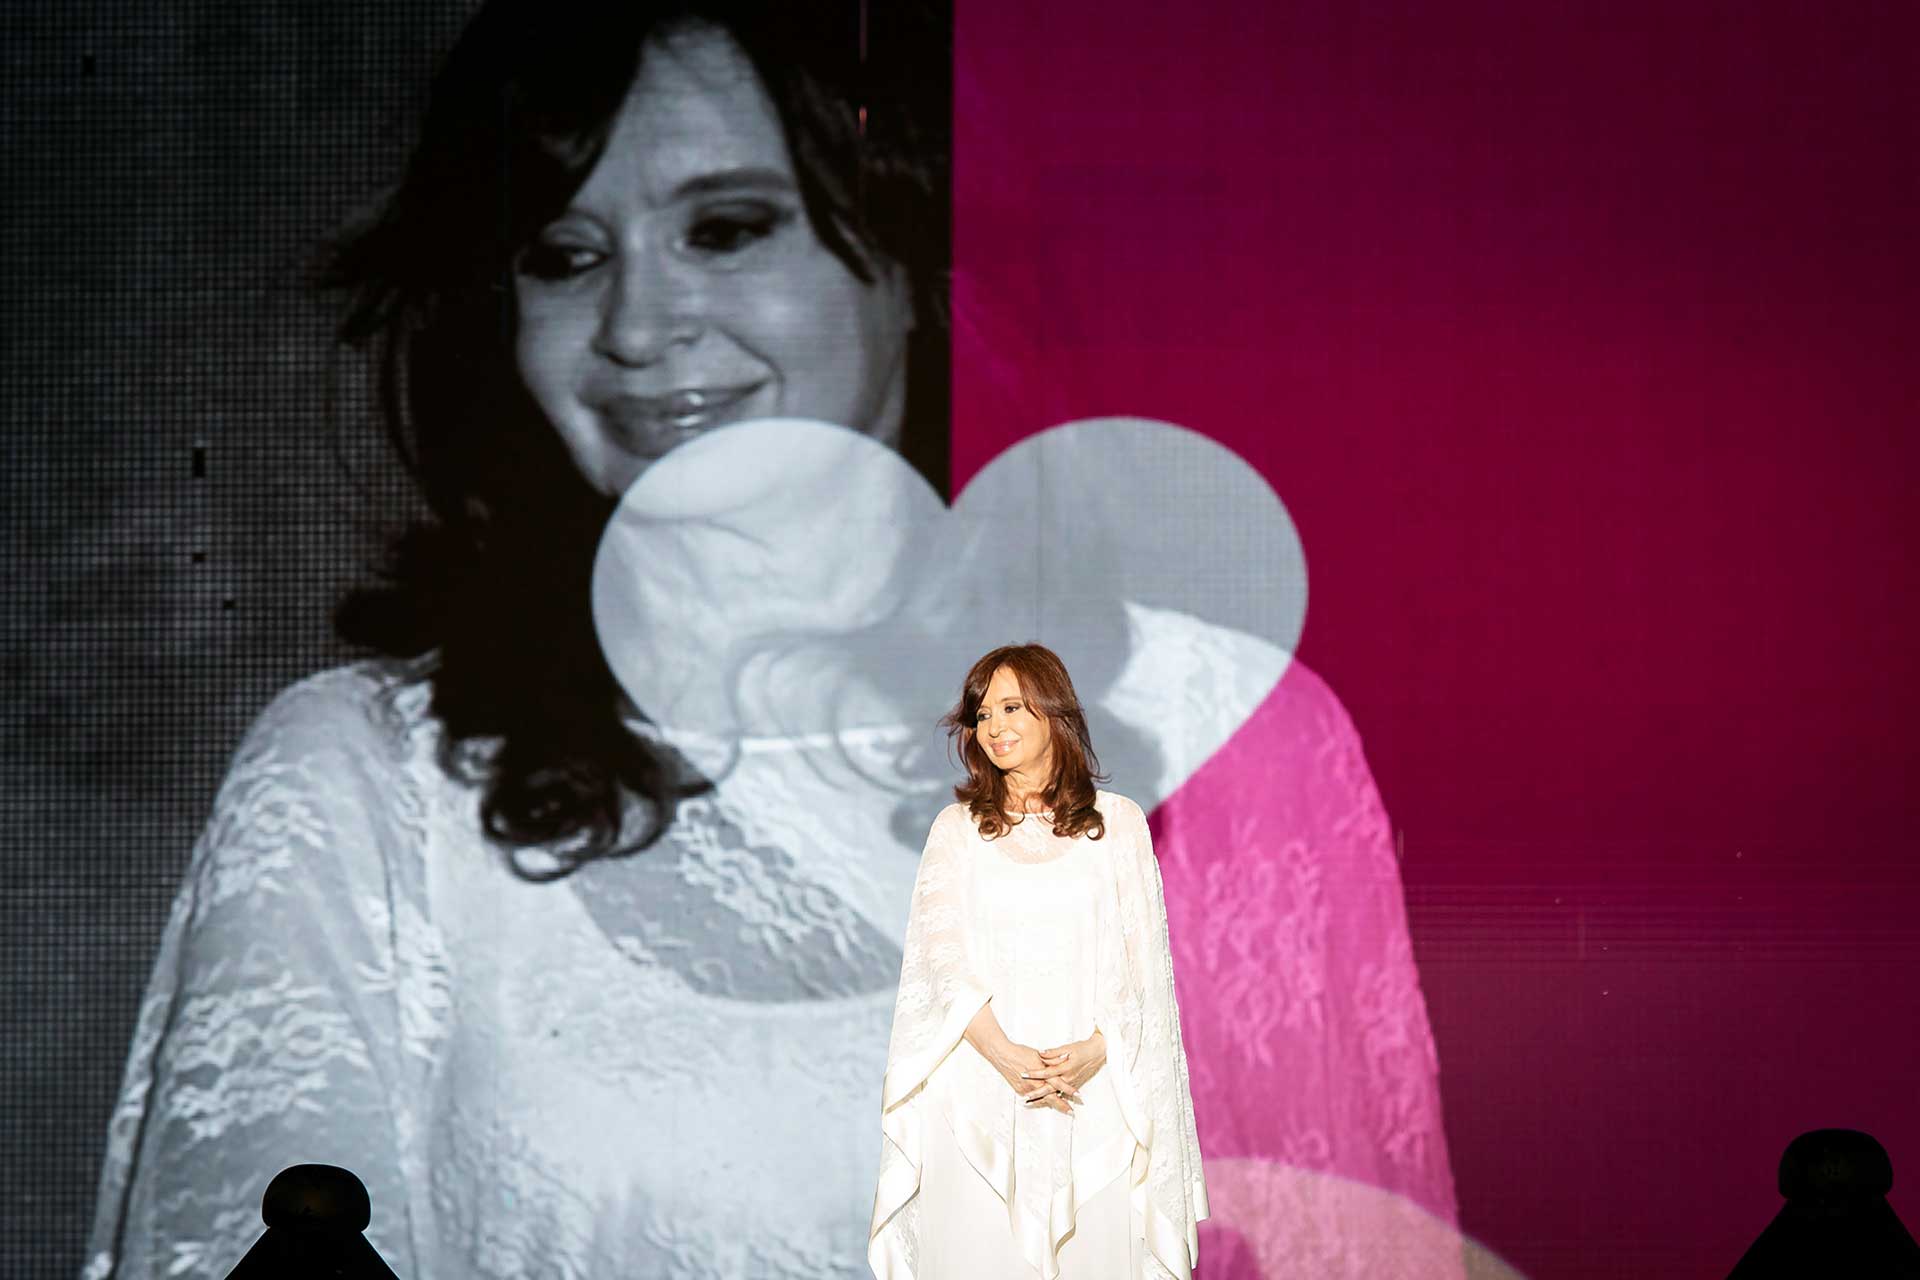 Fotografía de Cristina Fernández de Kirchner, Vicepresidenta. De fondo, una pantalla que capta el momento acompañándolo con un corazón